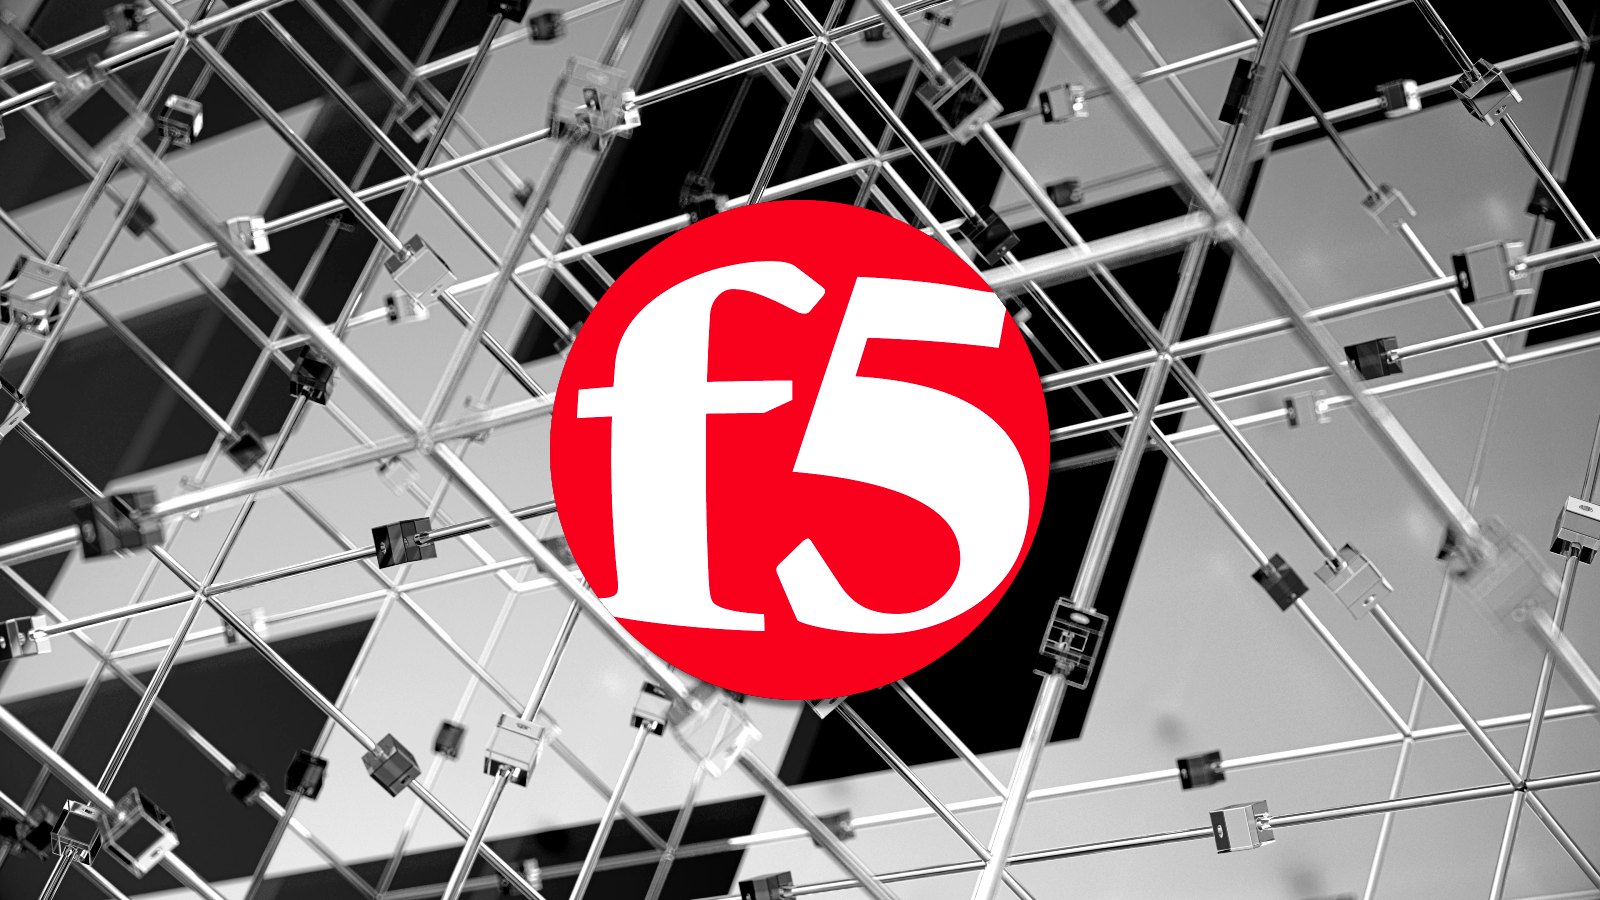 F5 logo over metal rods